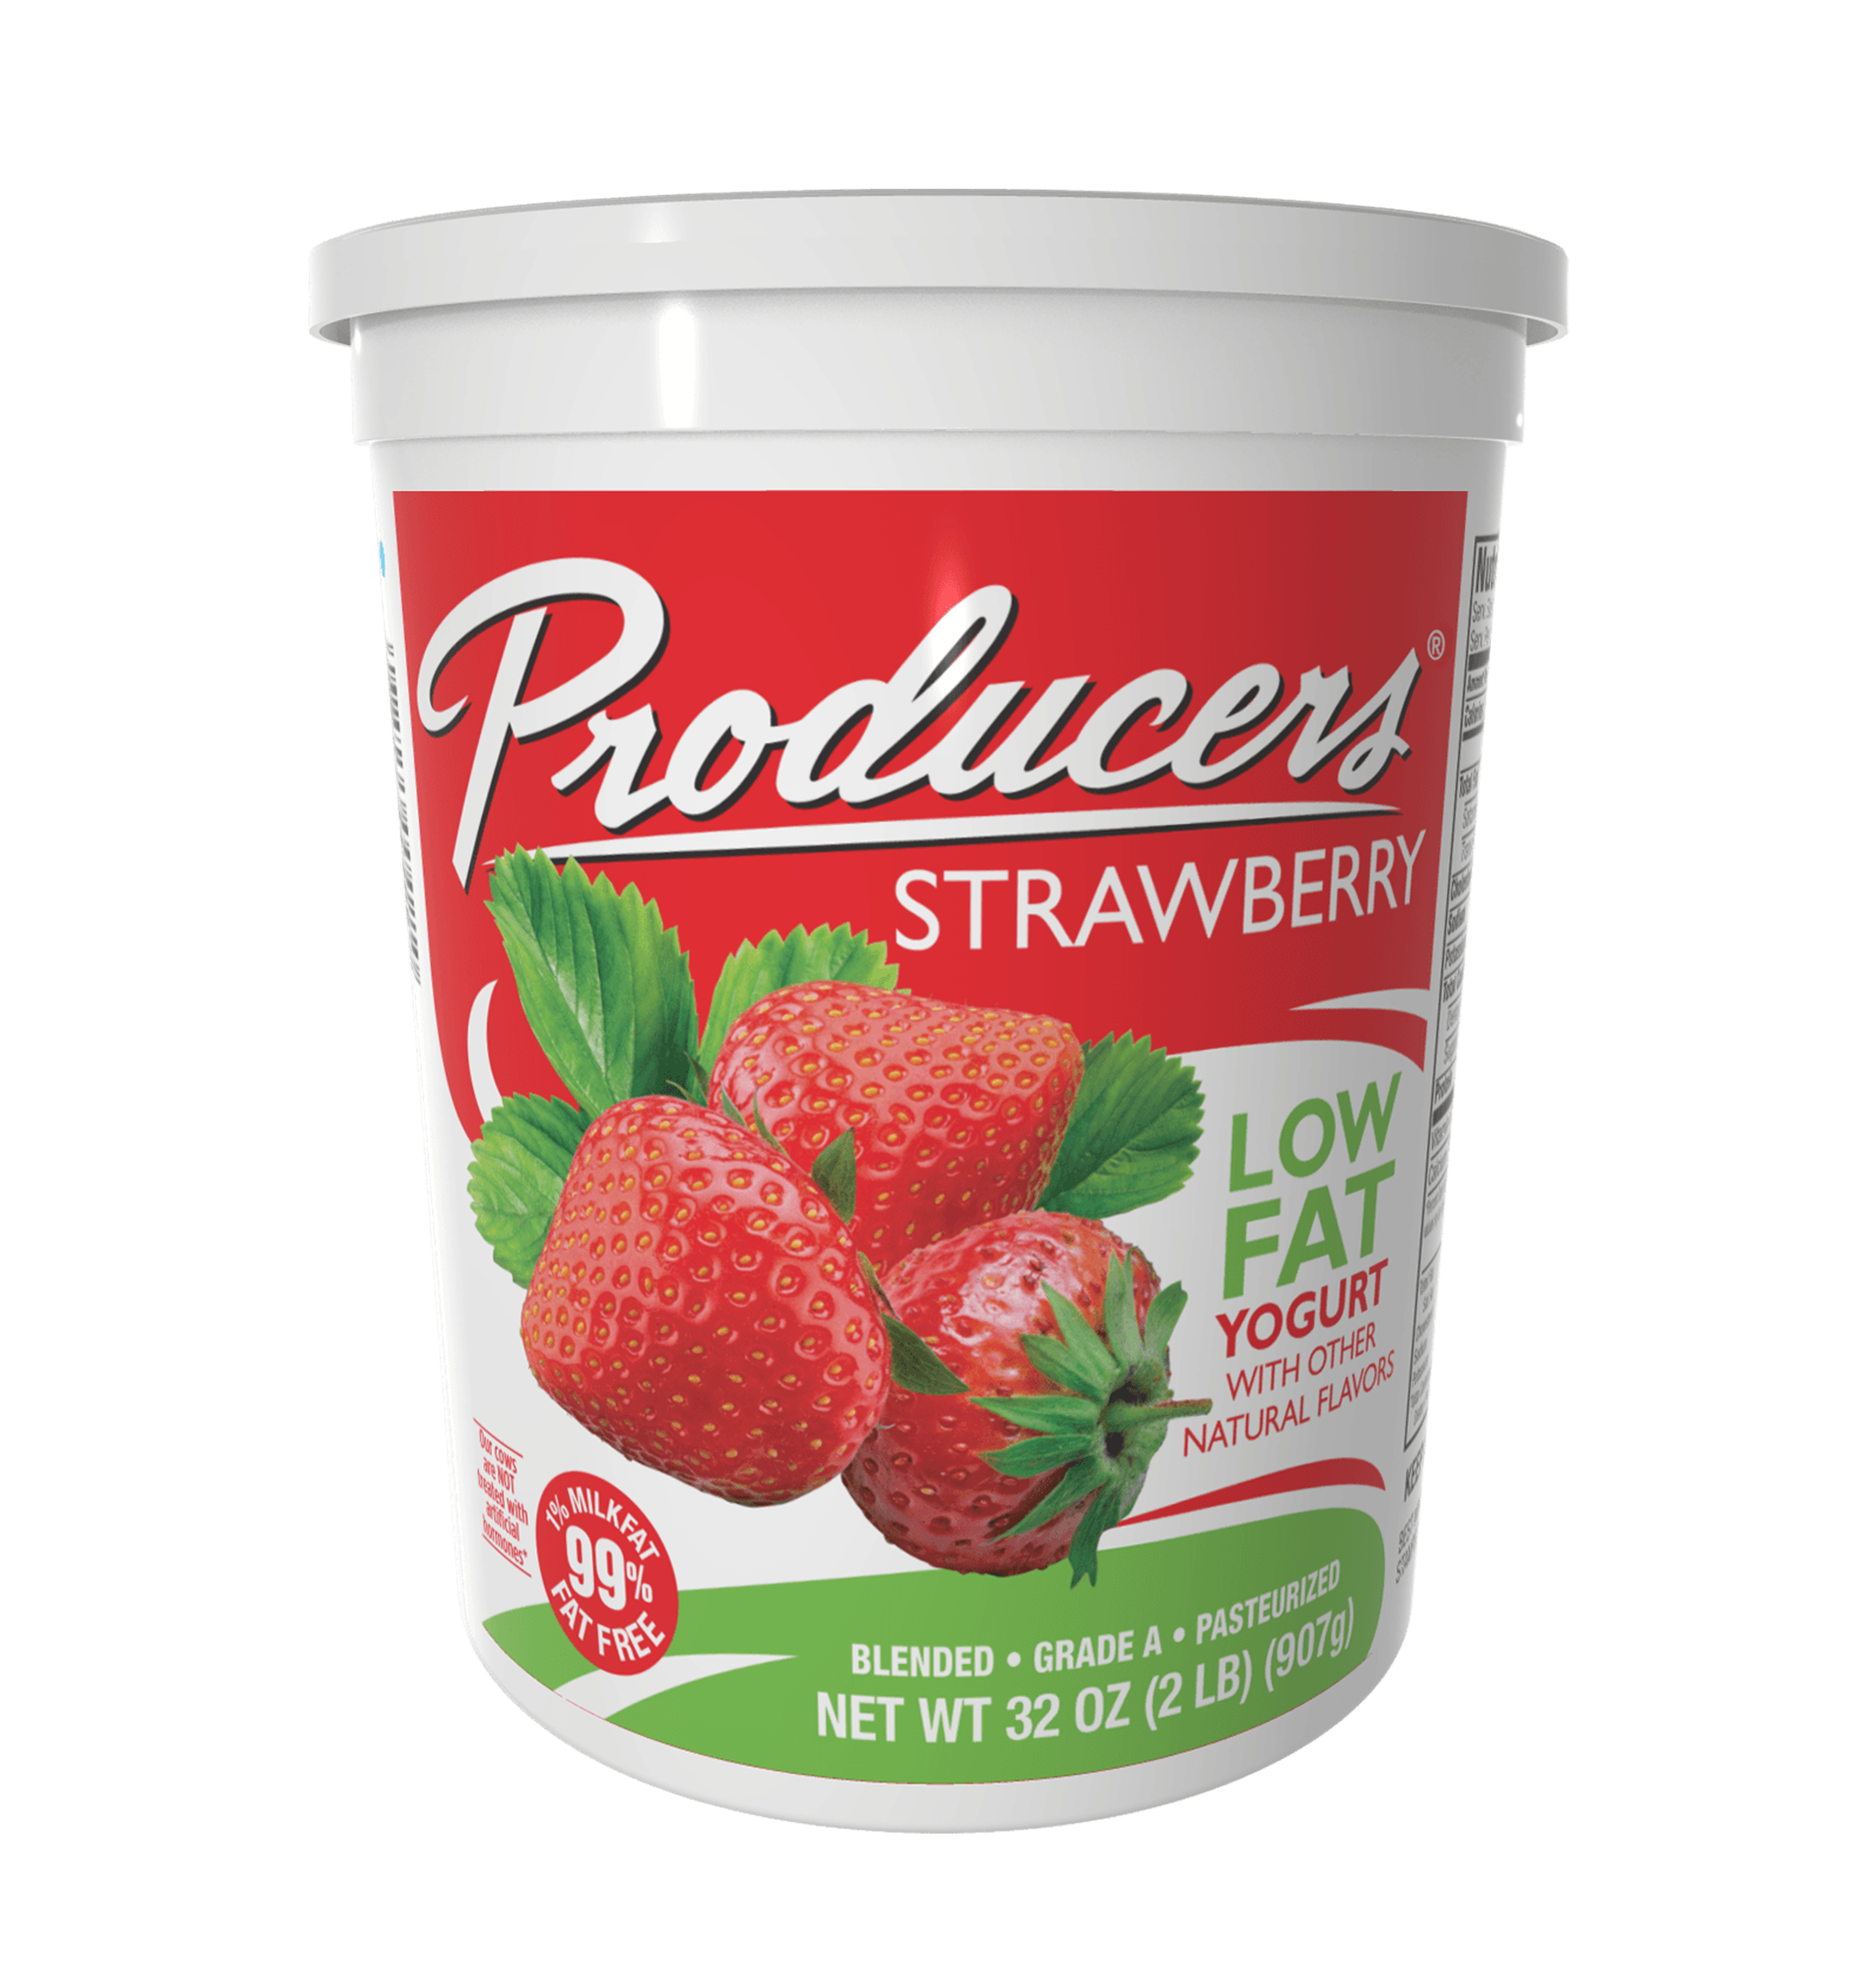 Producers Strawberry Yogurt 32 ounces.